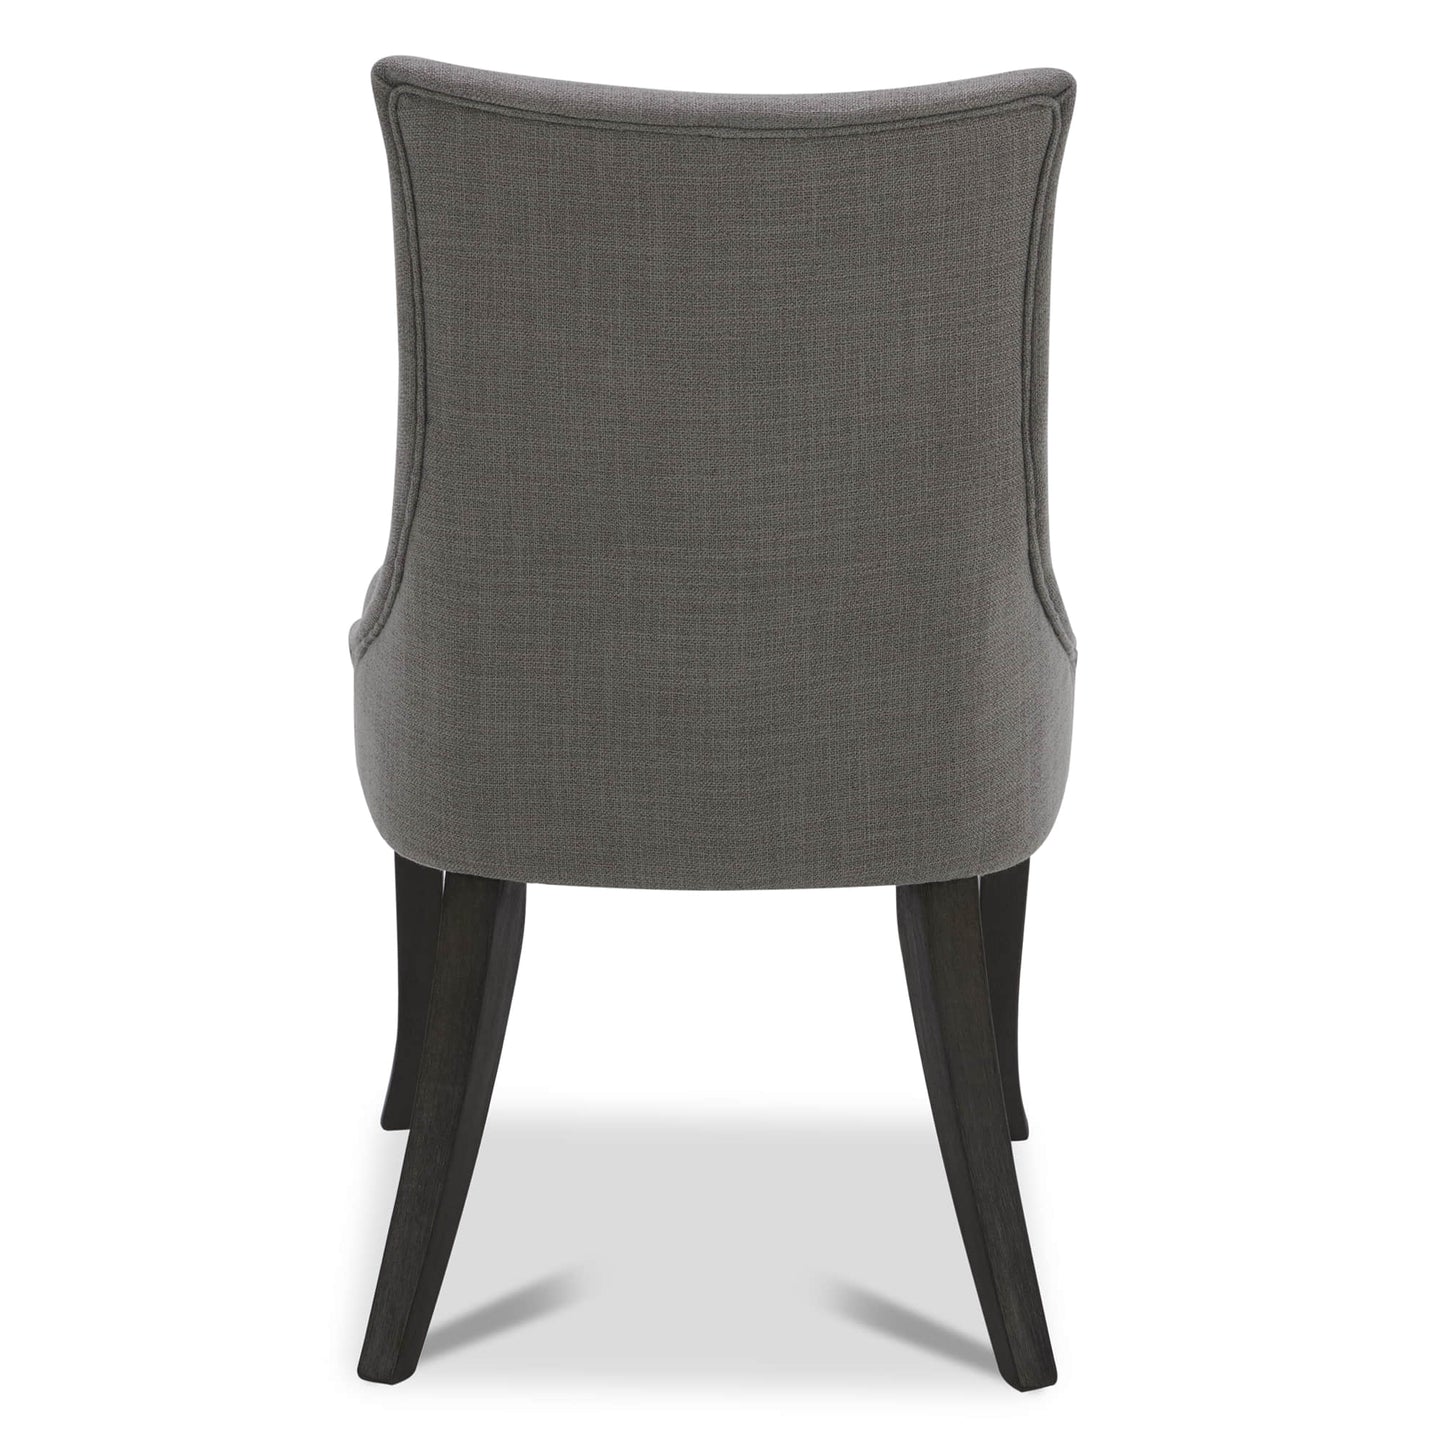 CHITA LIVING-Mia Romantic Dining Chair (Set of 2)-Dining Chairs-Performance Fabric-Flint Gray-